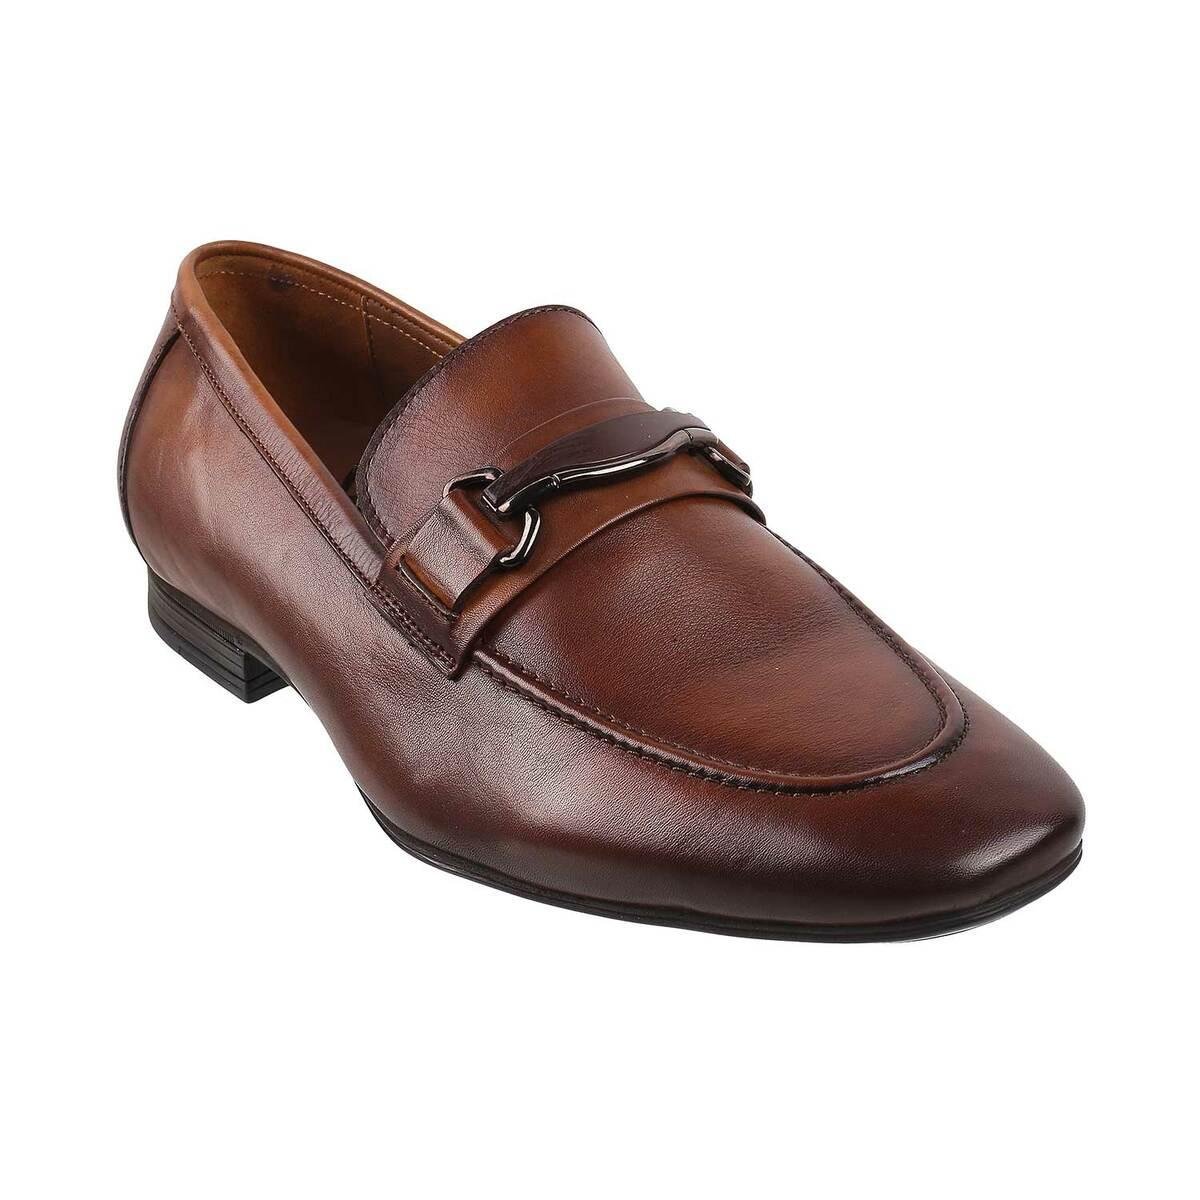 Finax Casual Shoes For Men - Buy Tan Color Finax Casual Shoes For Men  Online at Best Price - Shop Online for Footwears in India | Flipkart.com